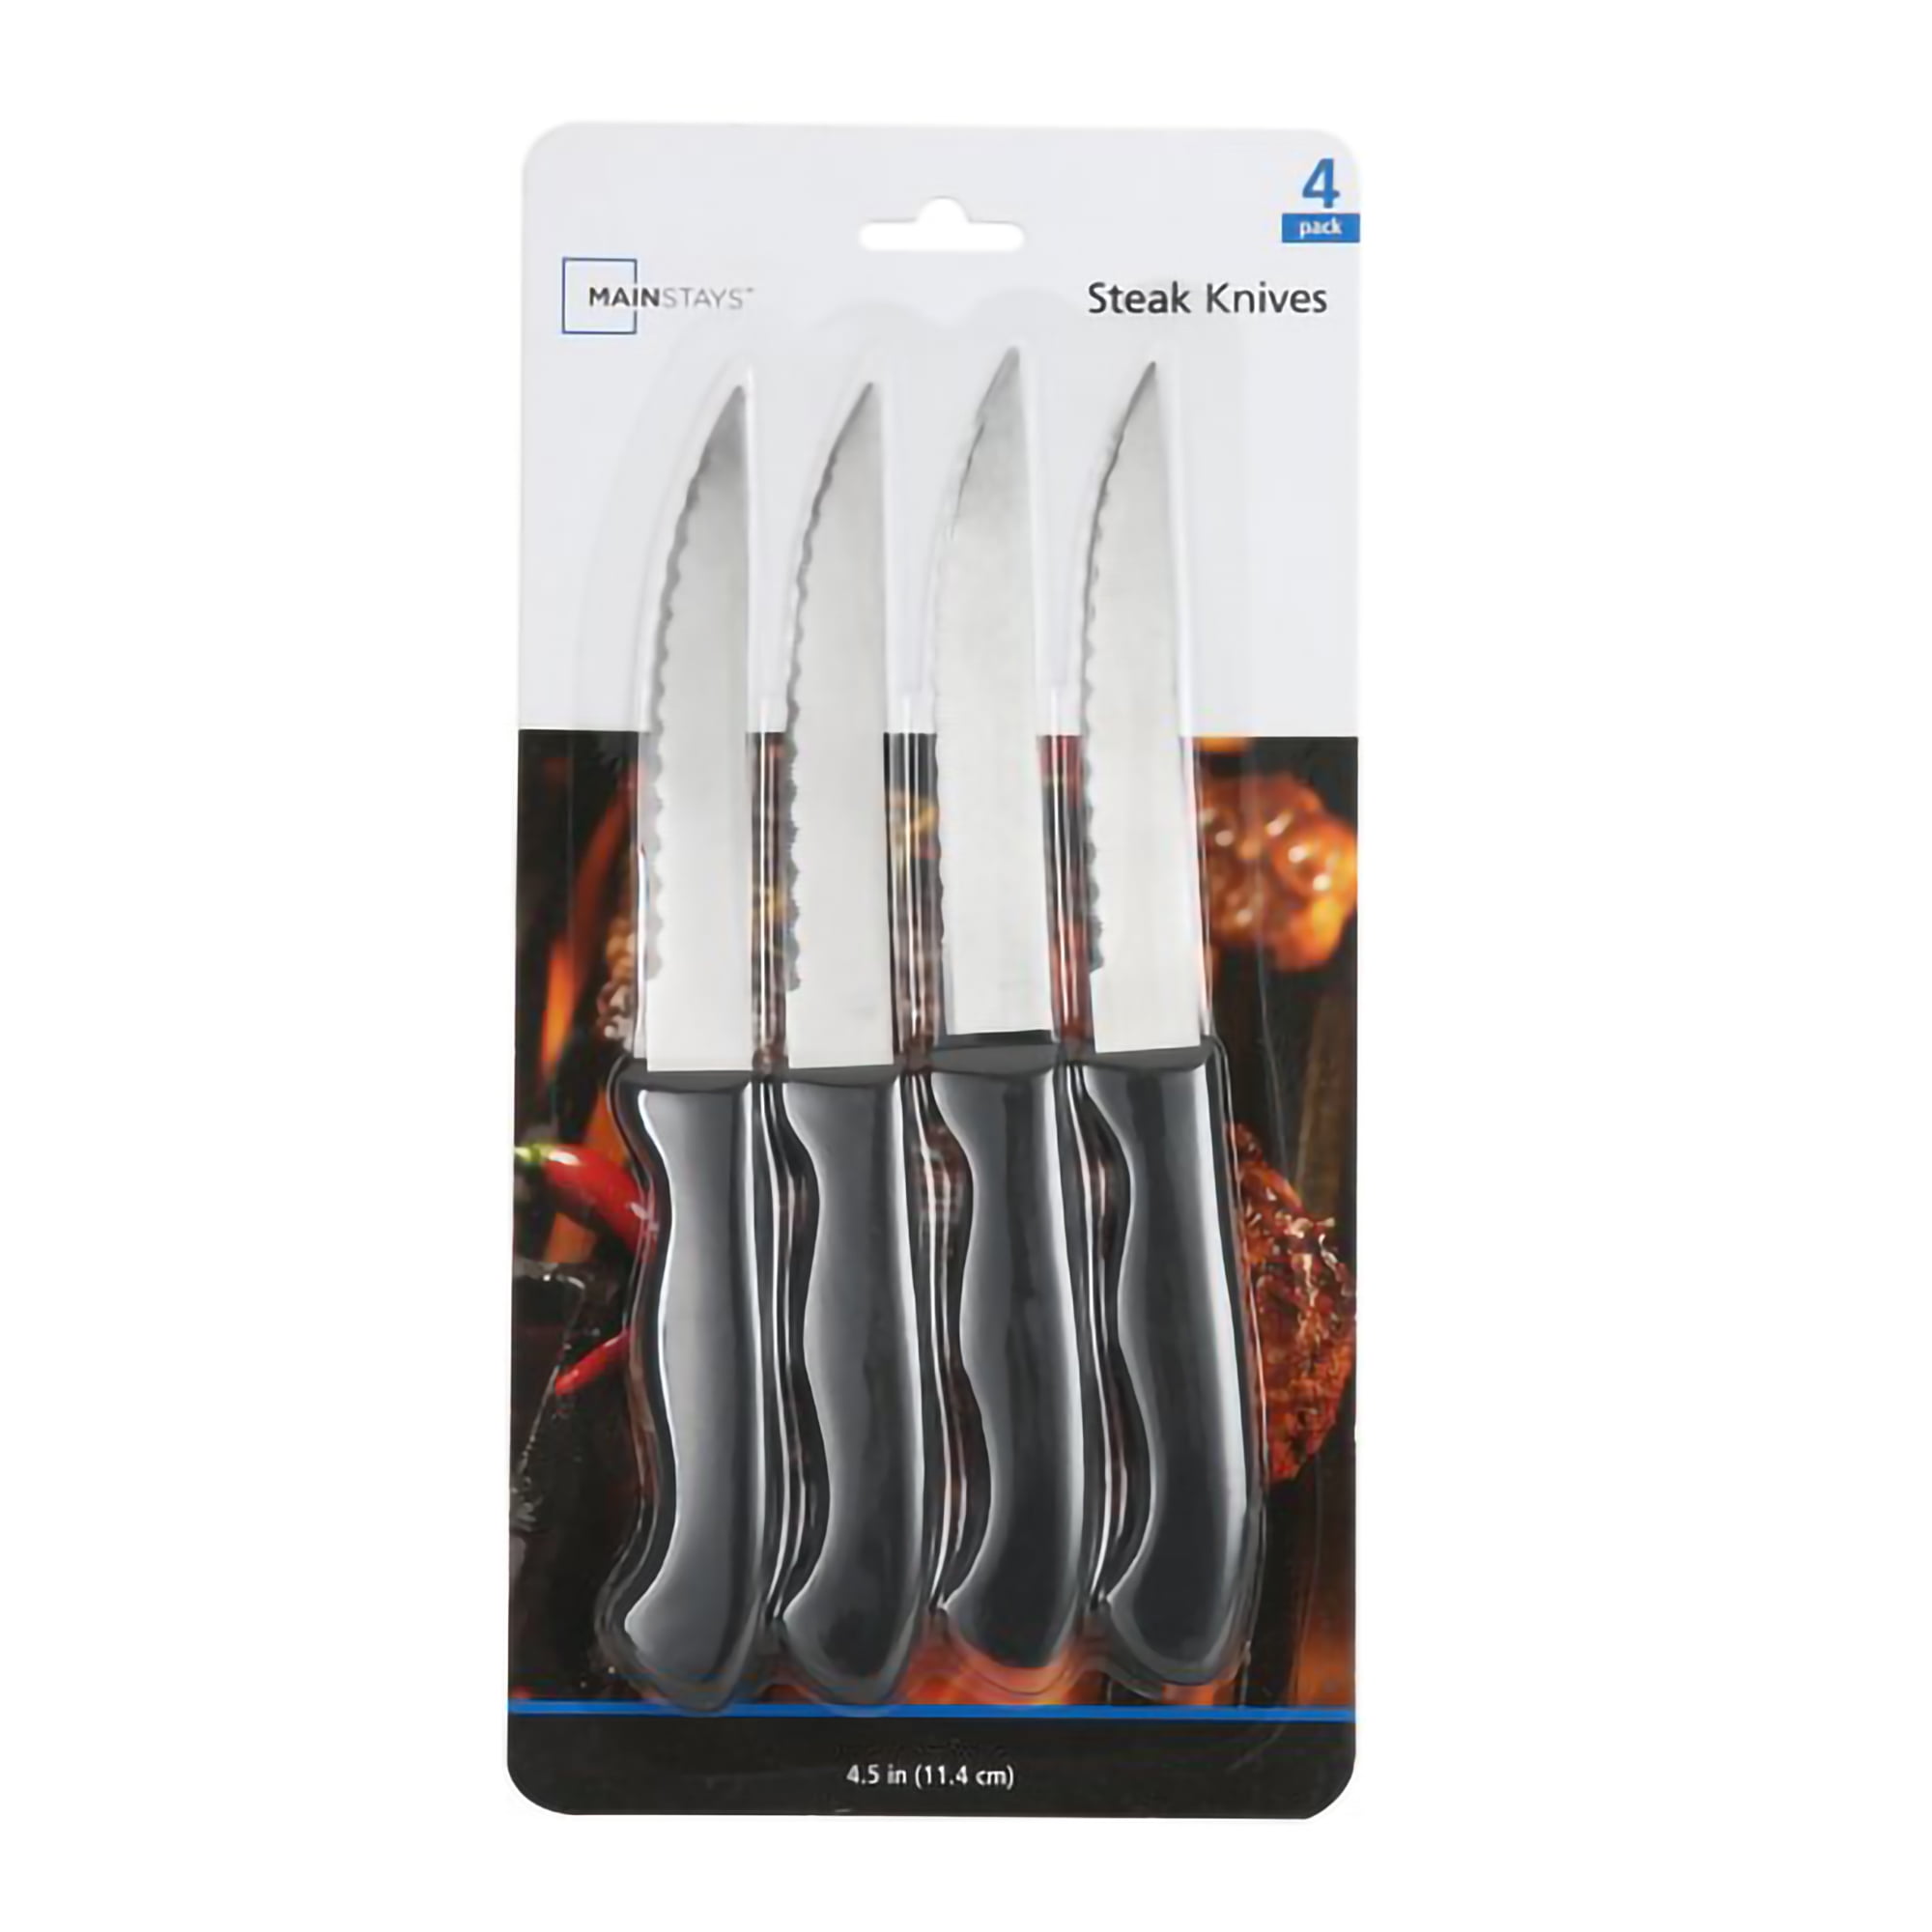 SiliSlick Steak Knife Set - Iridescent Titanium Coated Stainless Steel  Knives - 5 inch / 12.7cm - (6 Blue Handle & Blue Blade)